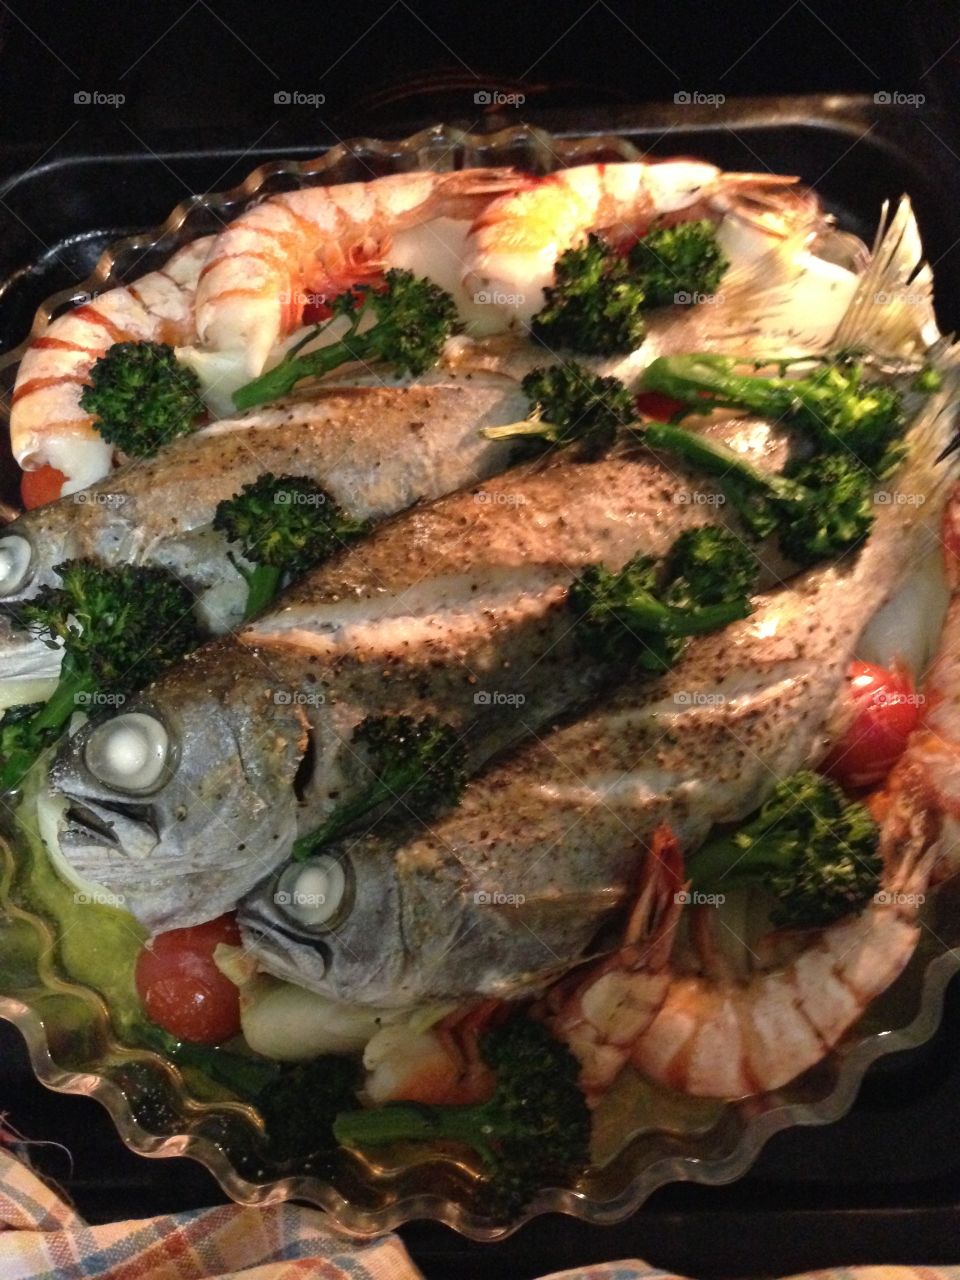 Fish dinner